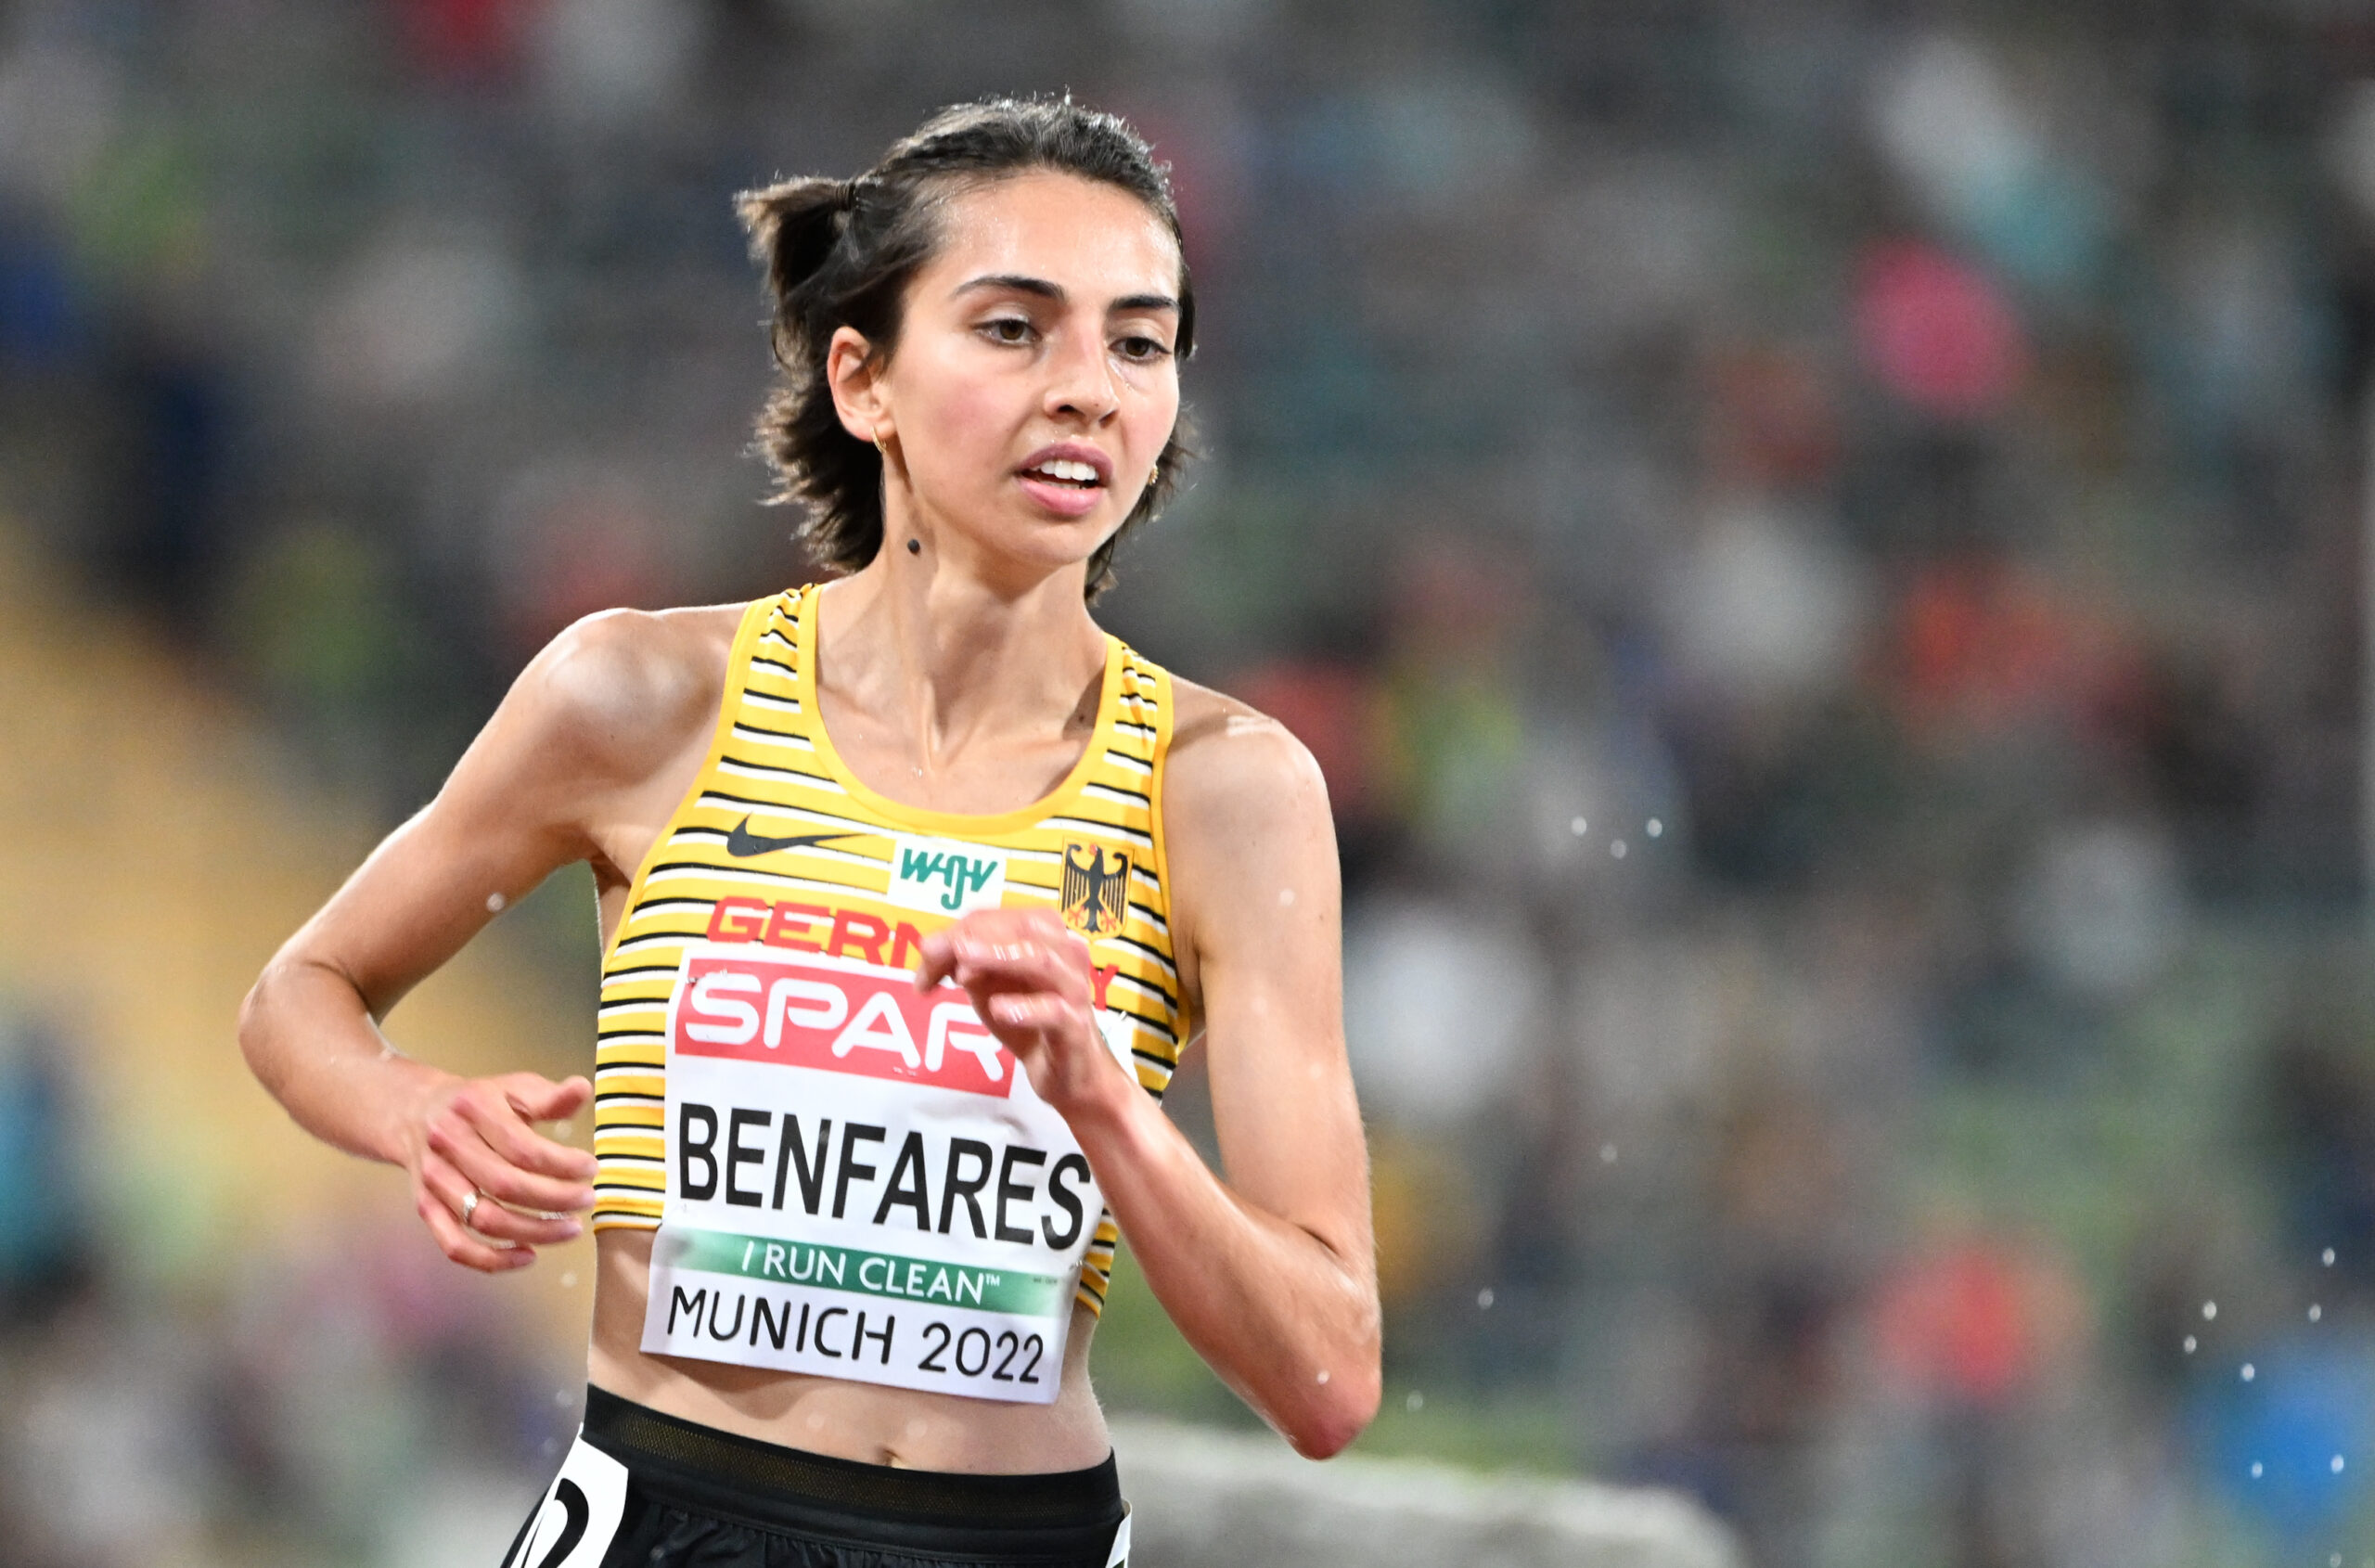 Sara Benfares bei den European Championships 2022